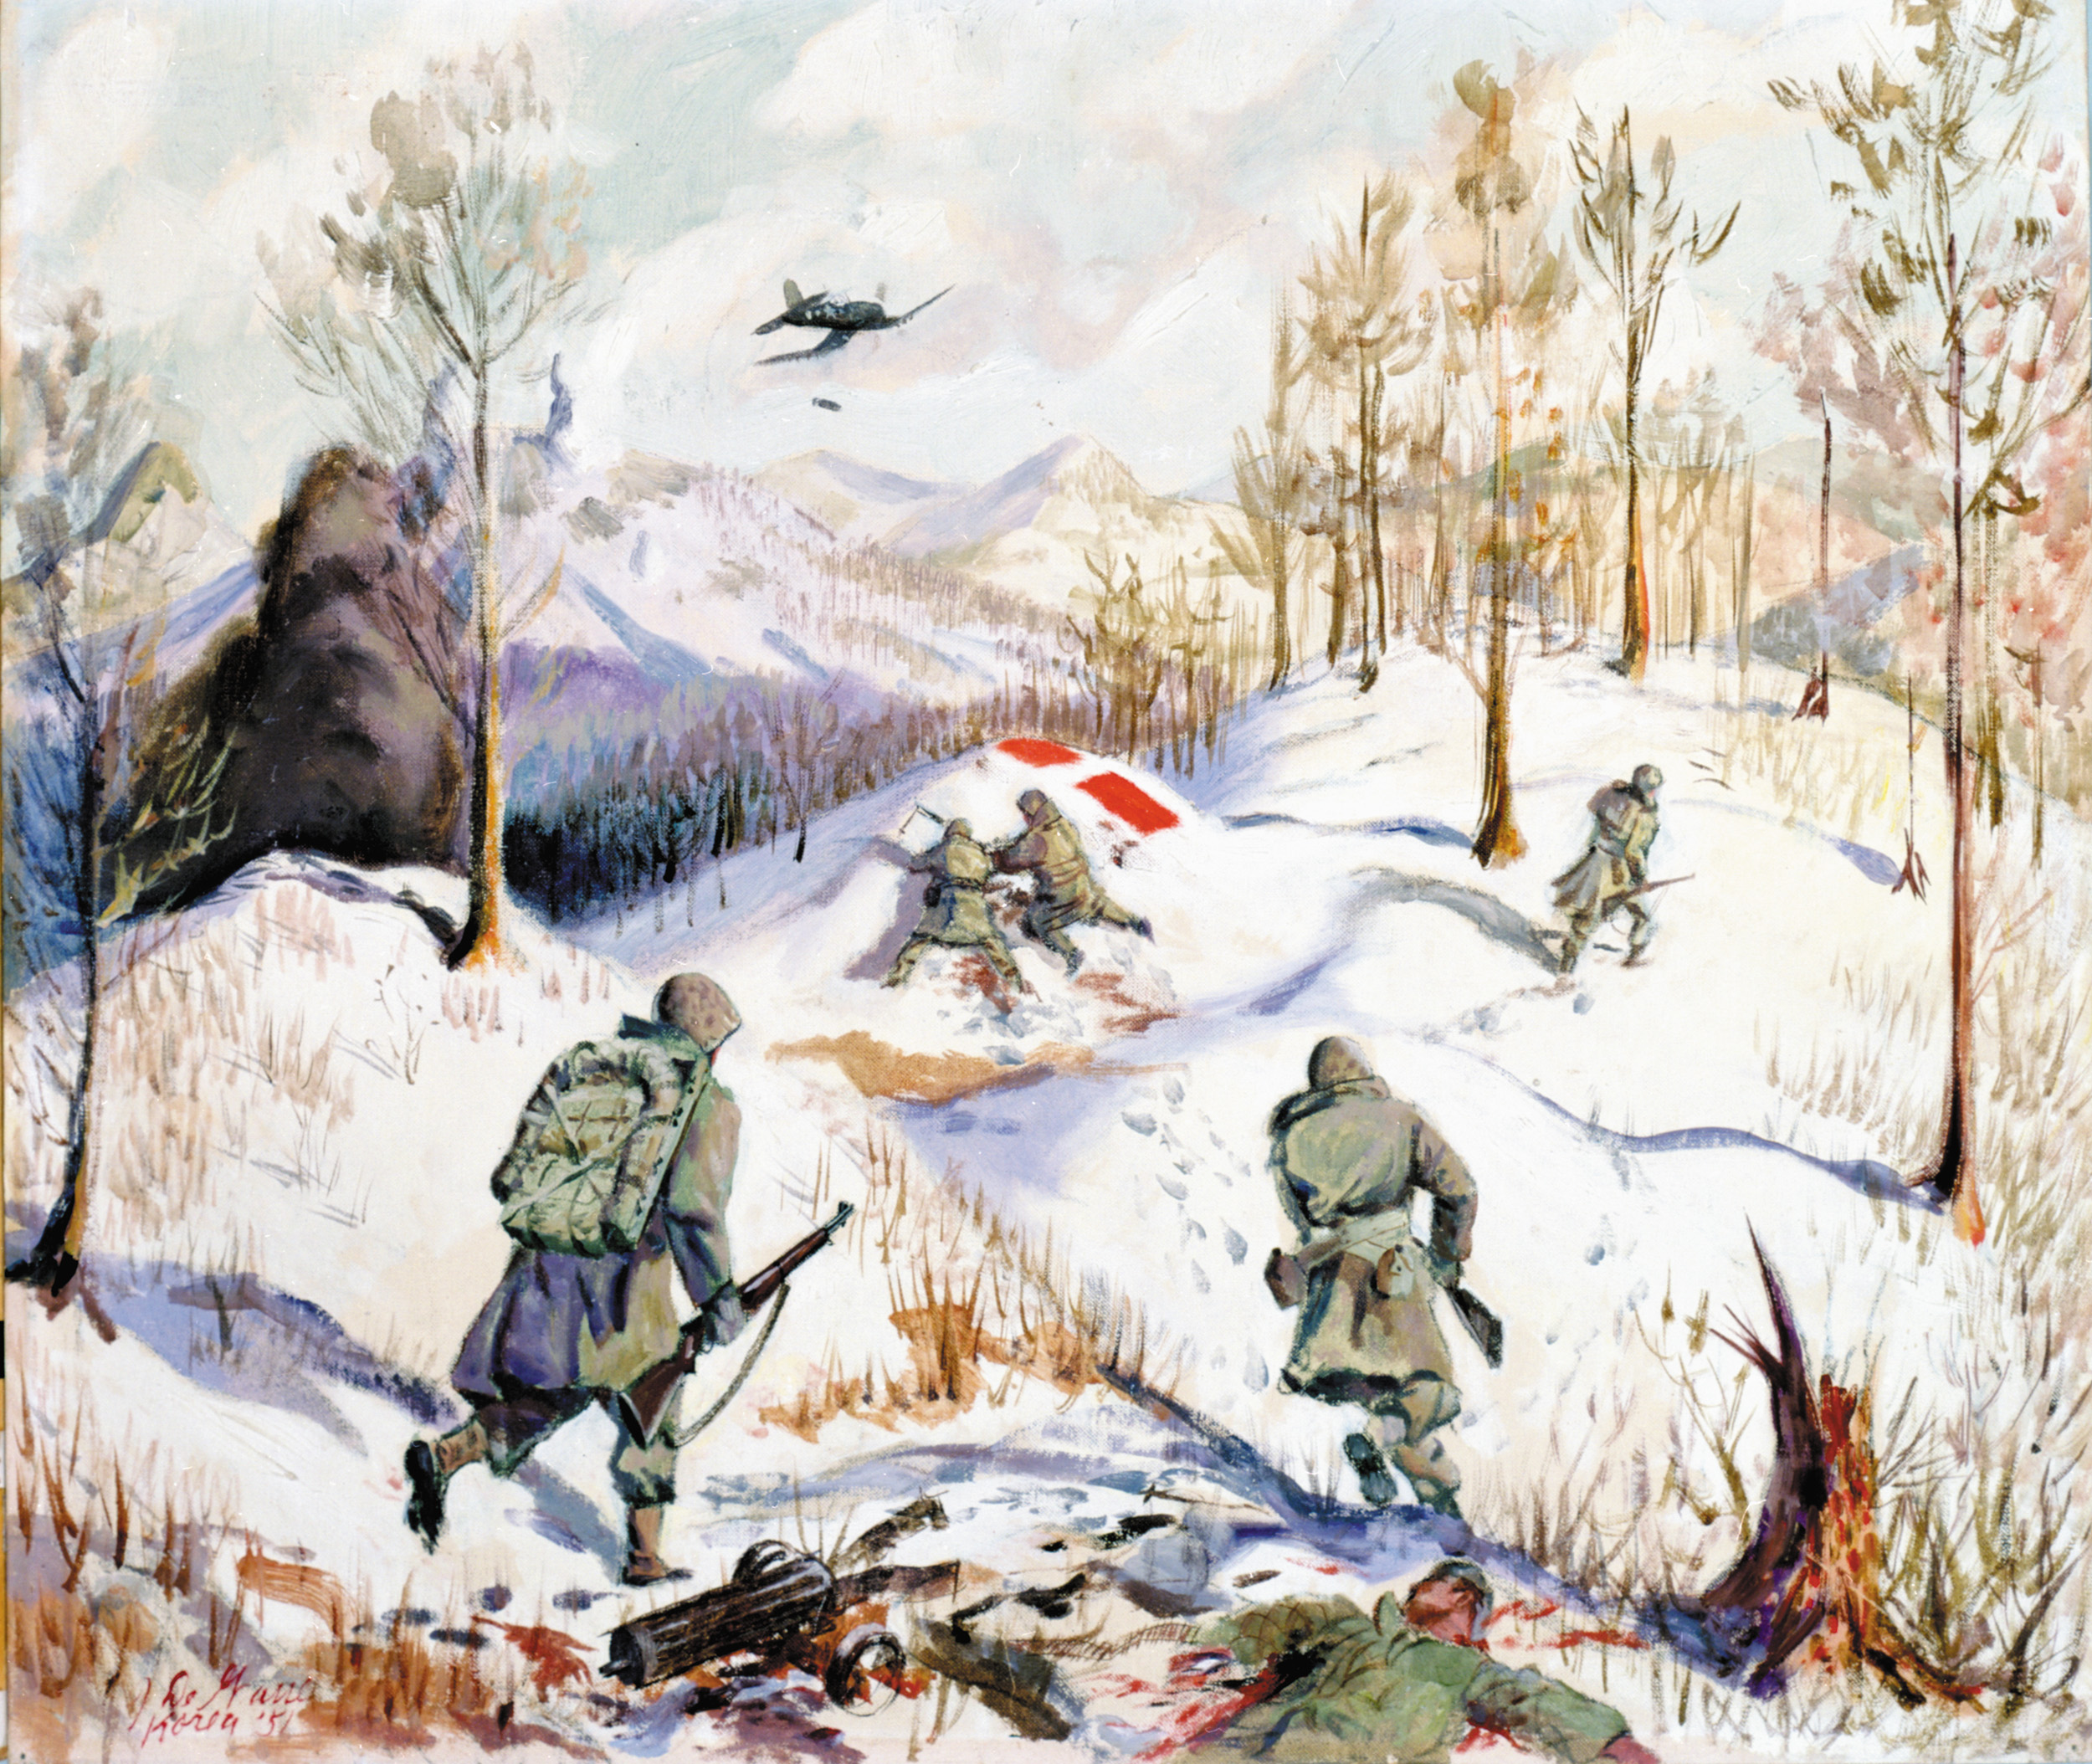 American Marines come under fire in “Korean Winter” by Marine Corps combat artist John DeGrasse. 